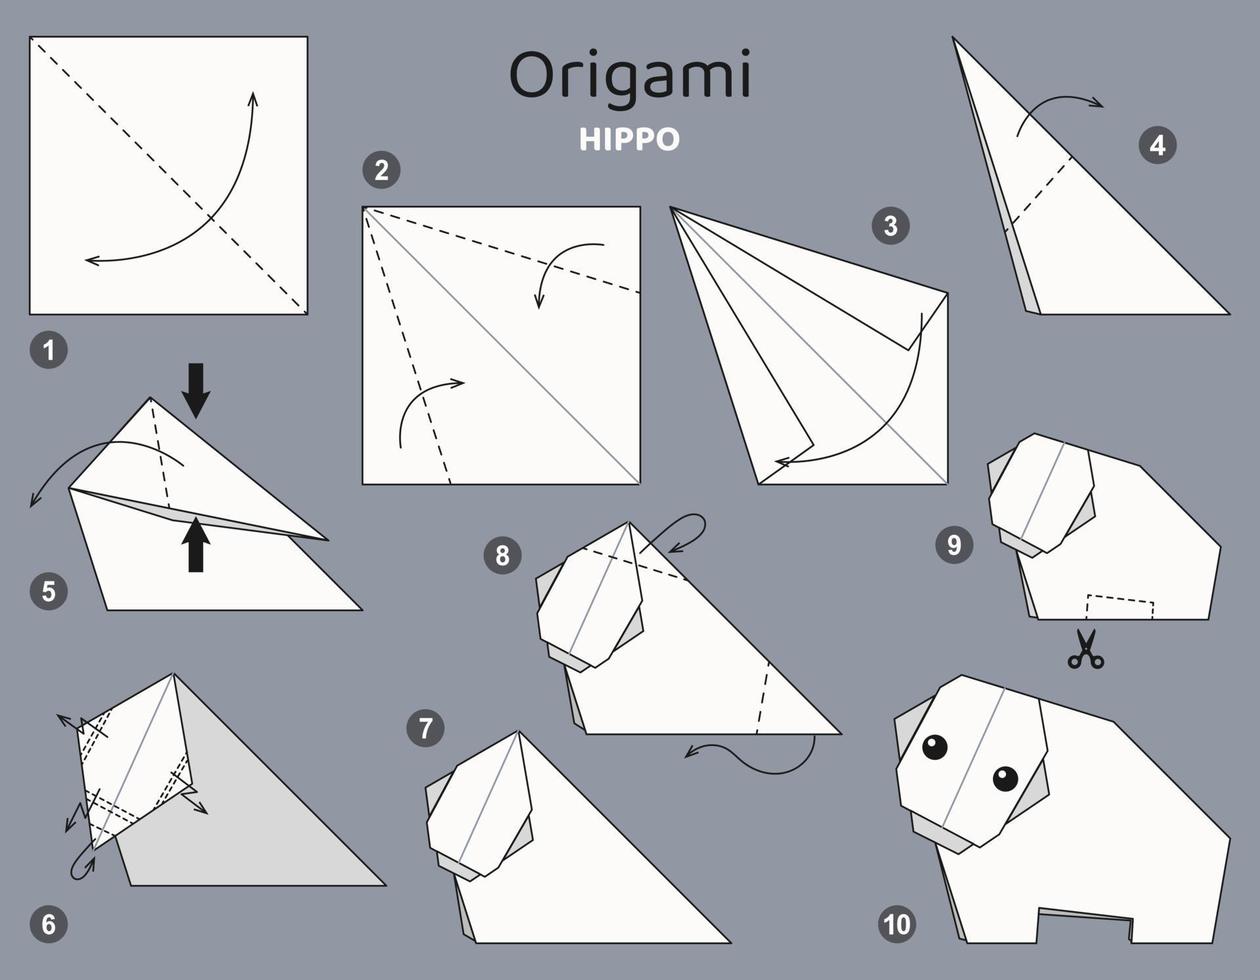 esquema de origami tutorial con hipopótamo. elementos de origami aislados sobre fondo gris. papiroflexia para niños. paso a paso como hacer origami hipopotamo. ilustración vectorial vector